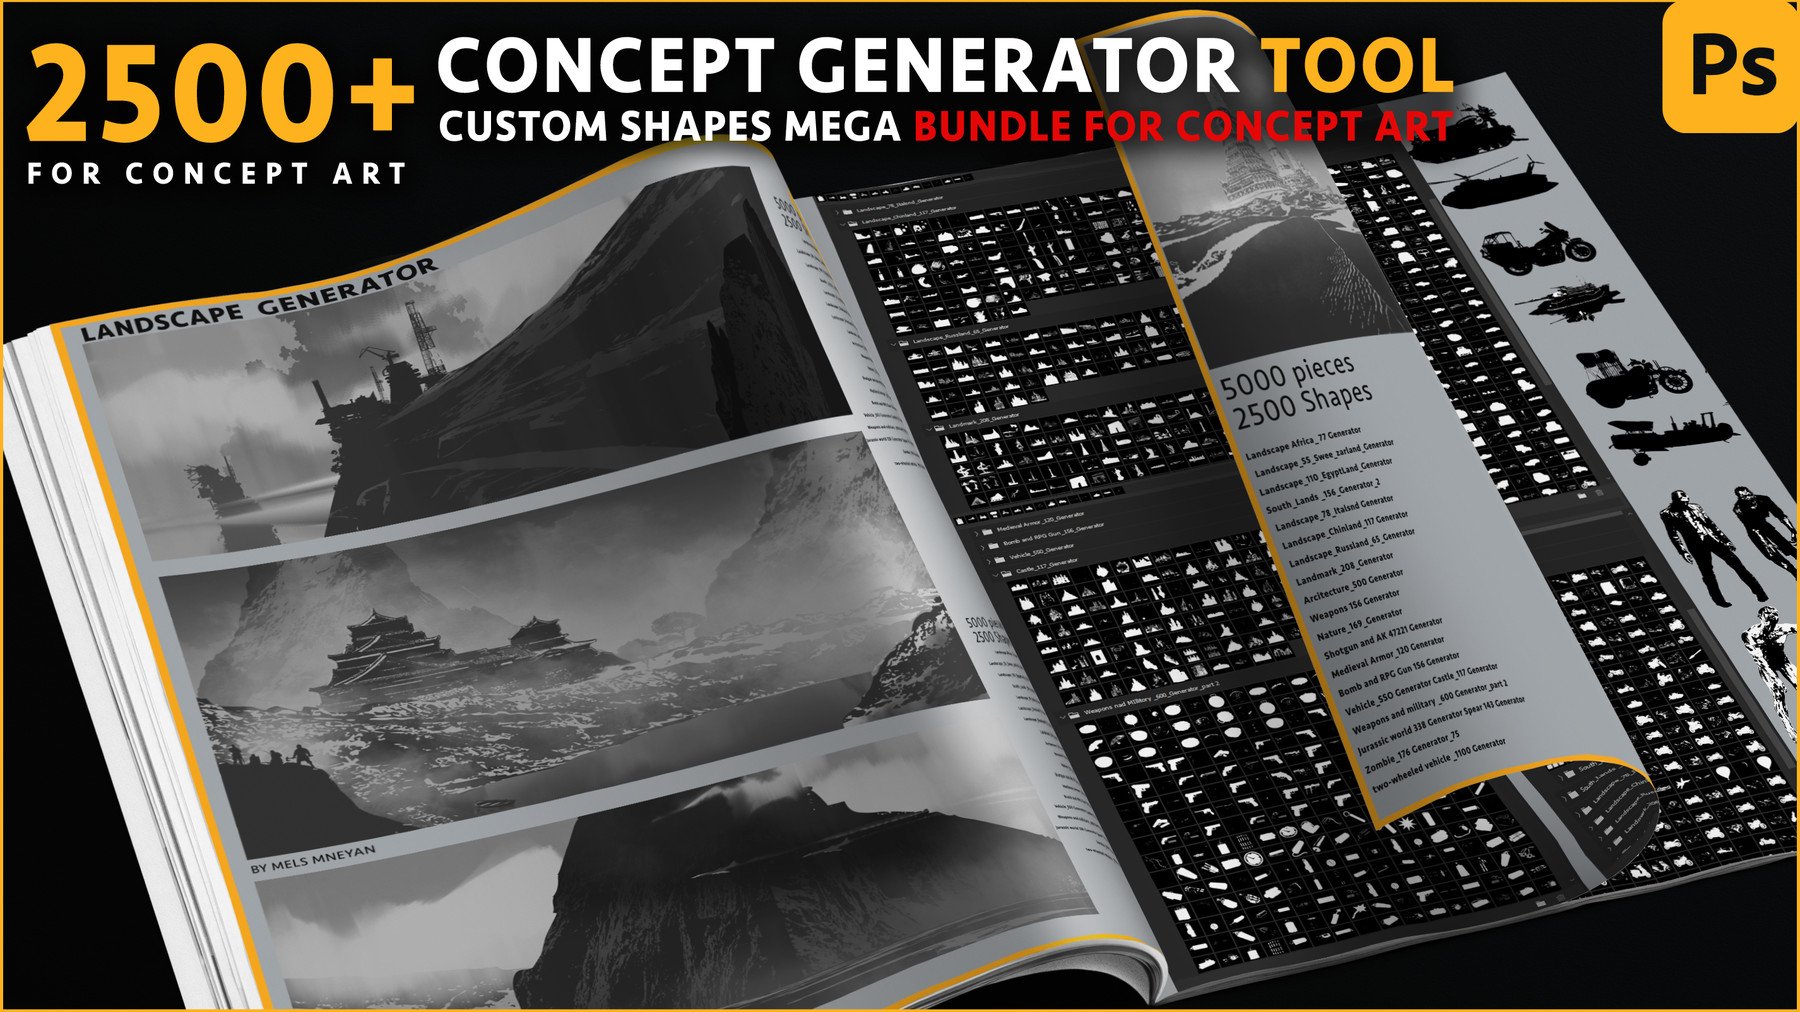 Concept Generator Tool - 5200 Pieces